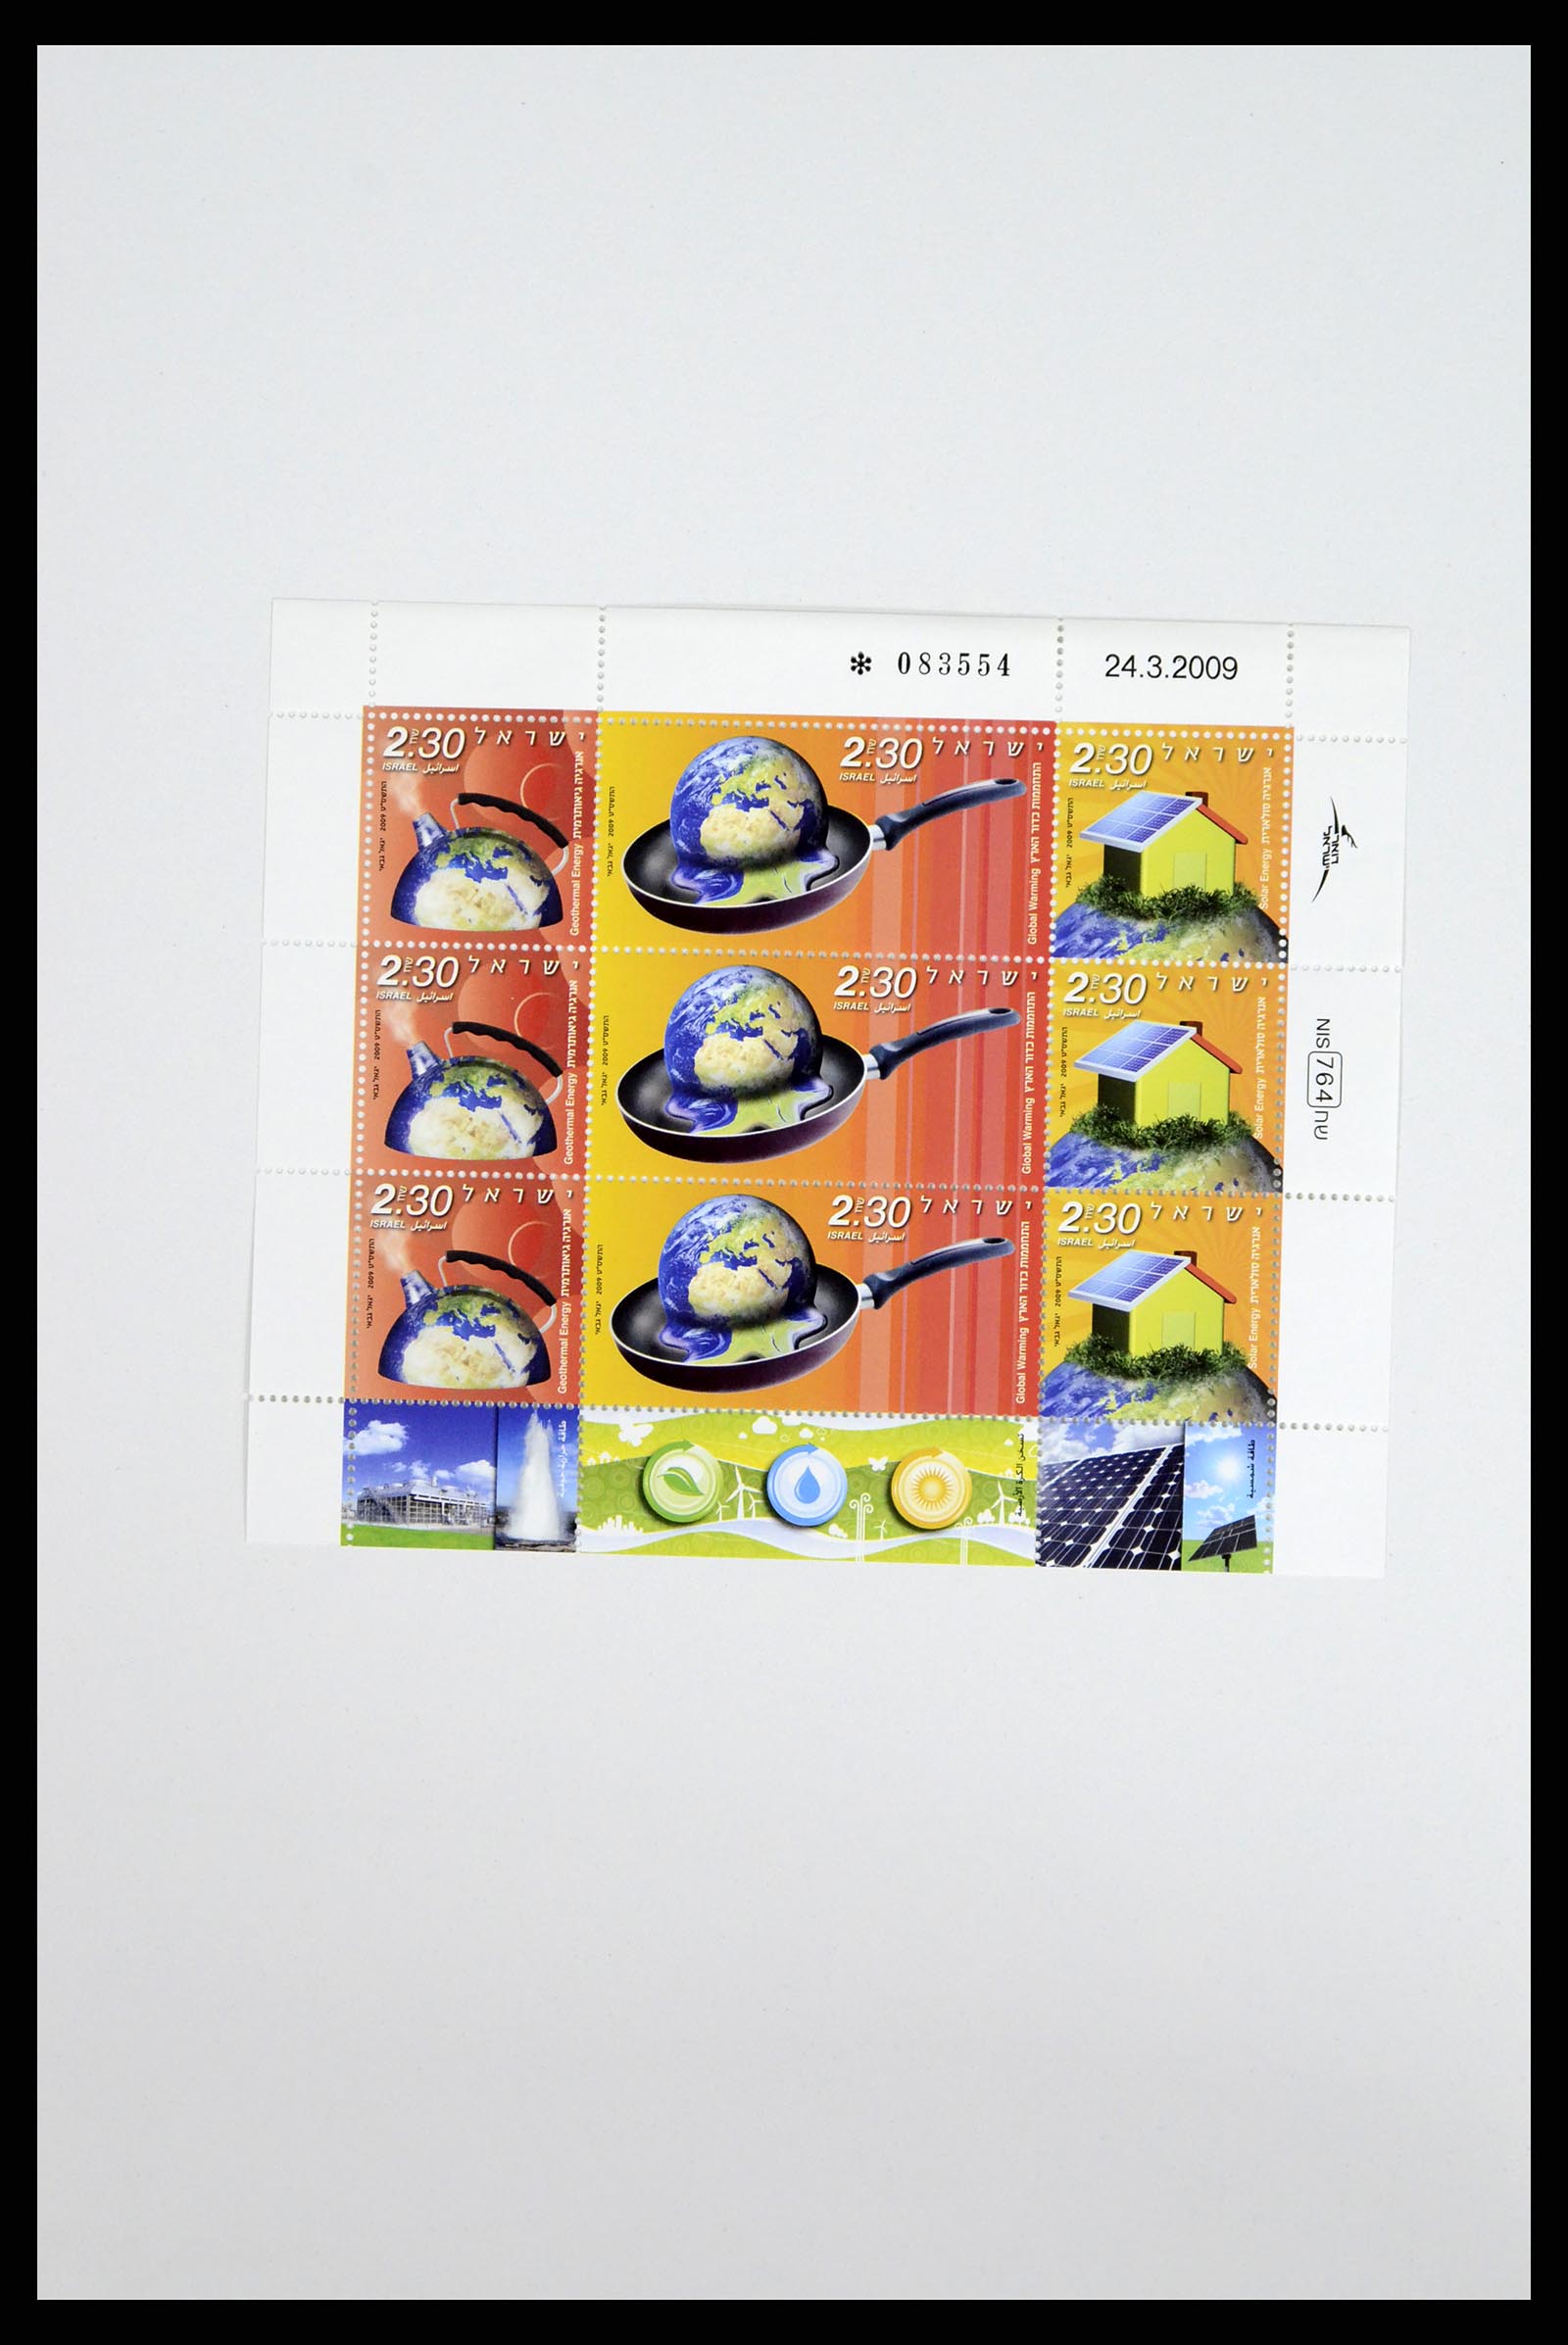 37779 082 - Stamp collection 37779 Israel sheetlets 1986-2009.